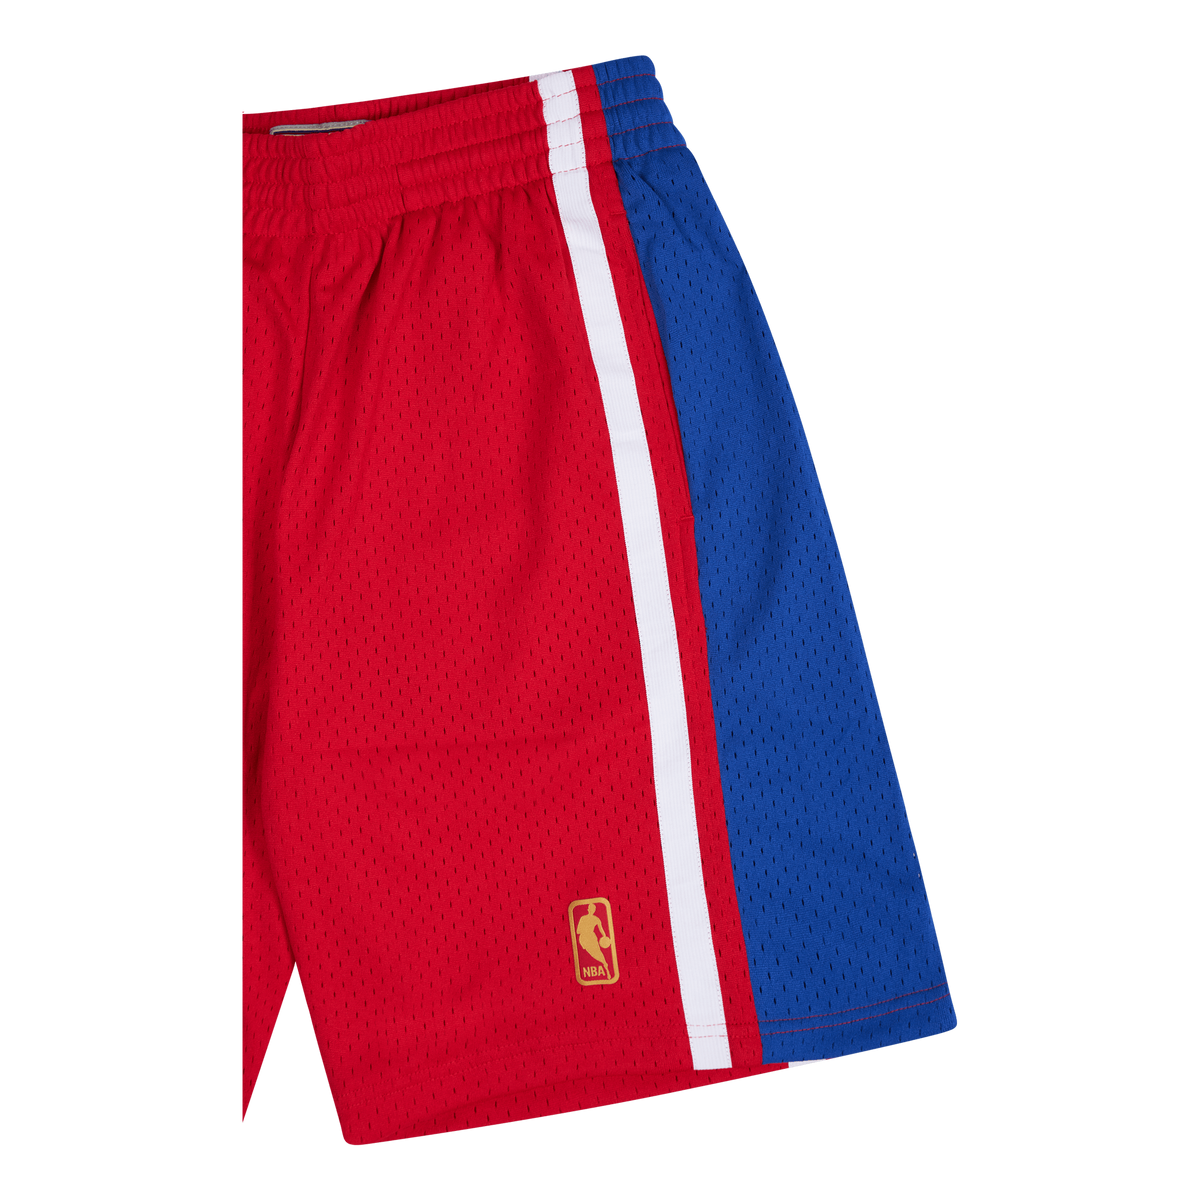 76ers Swingman Shorts 96-97